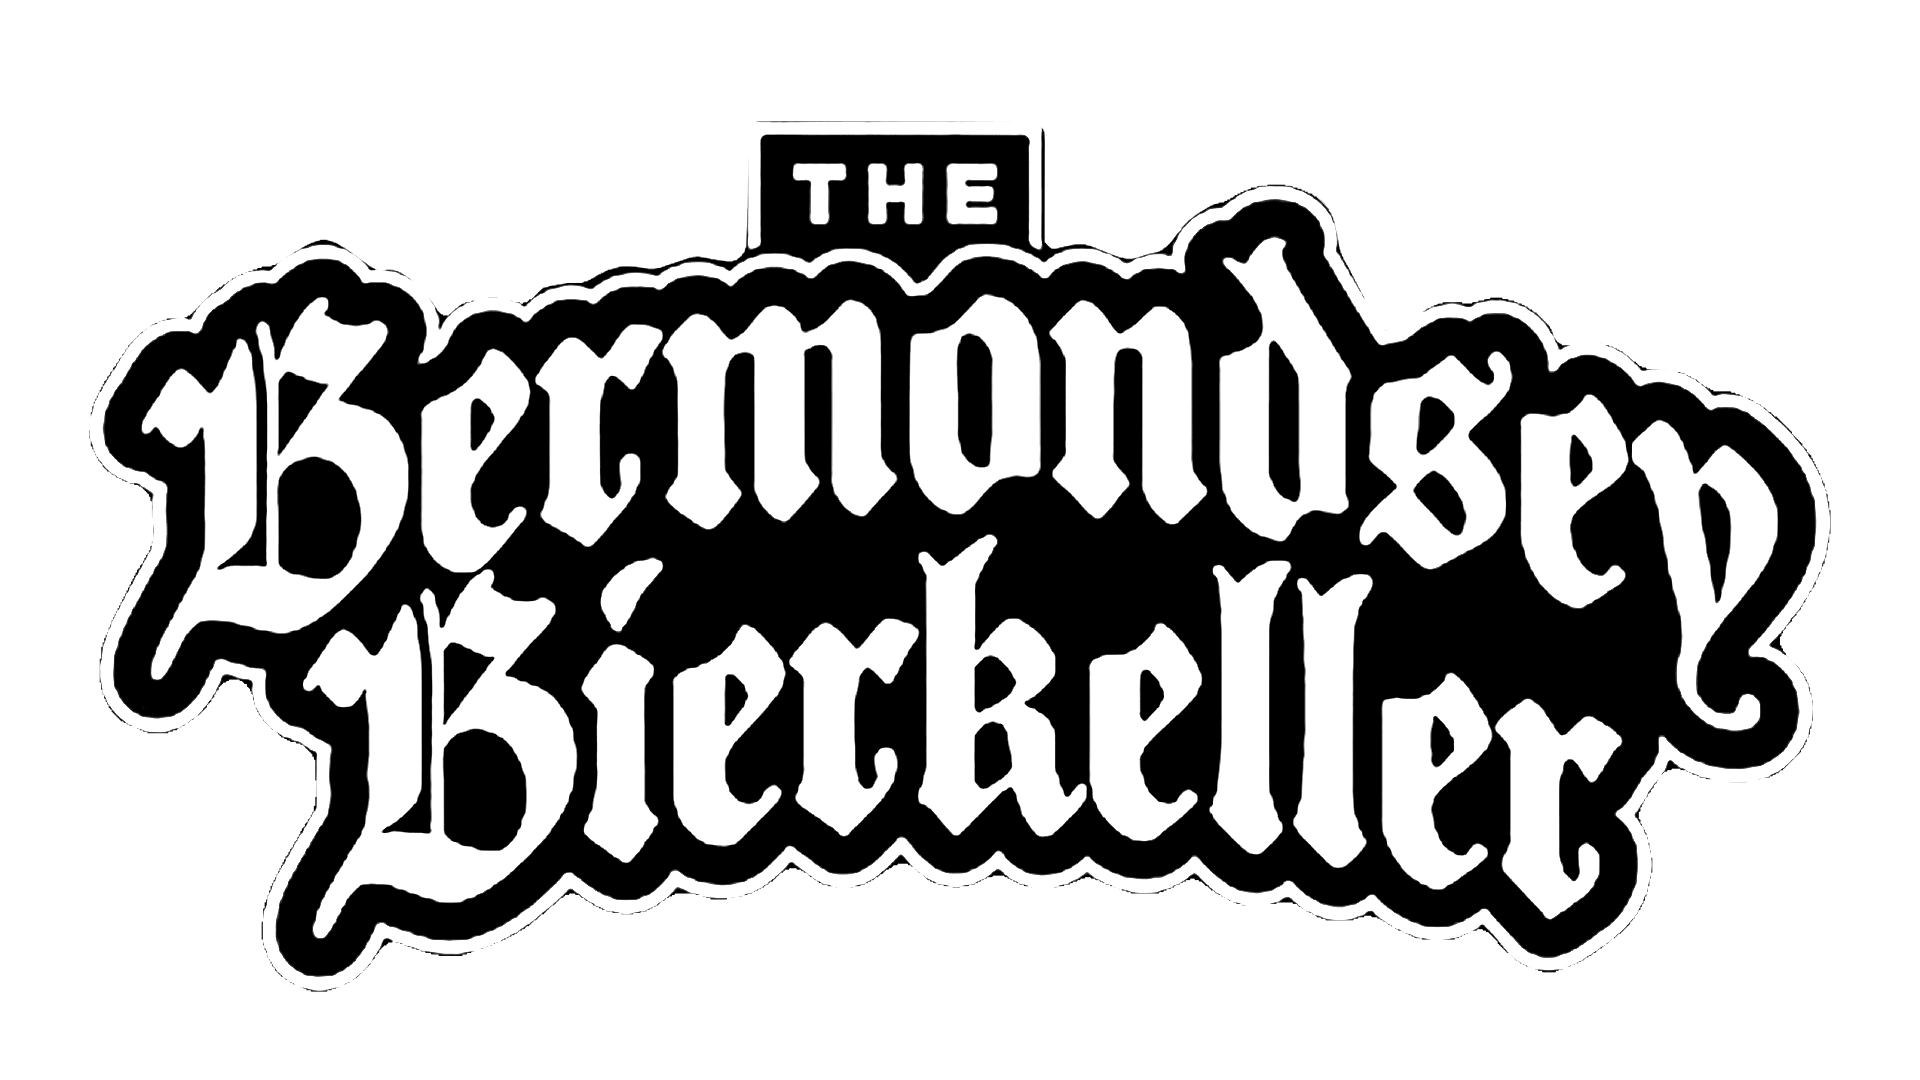 Bermondsey-Bierkeller-logo